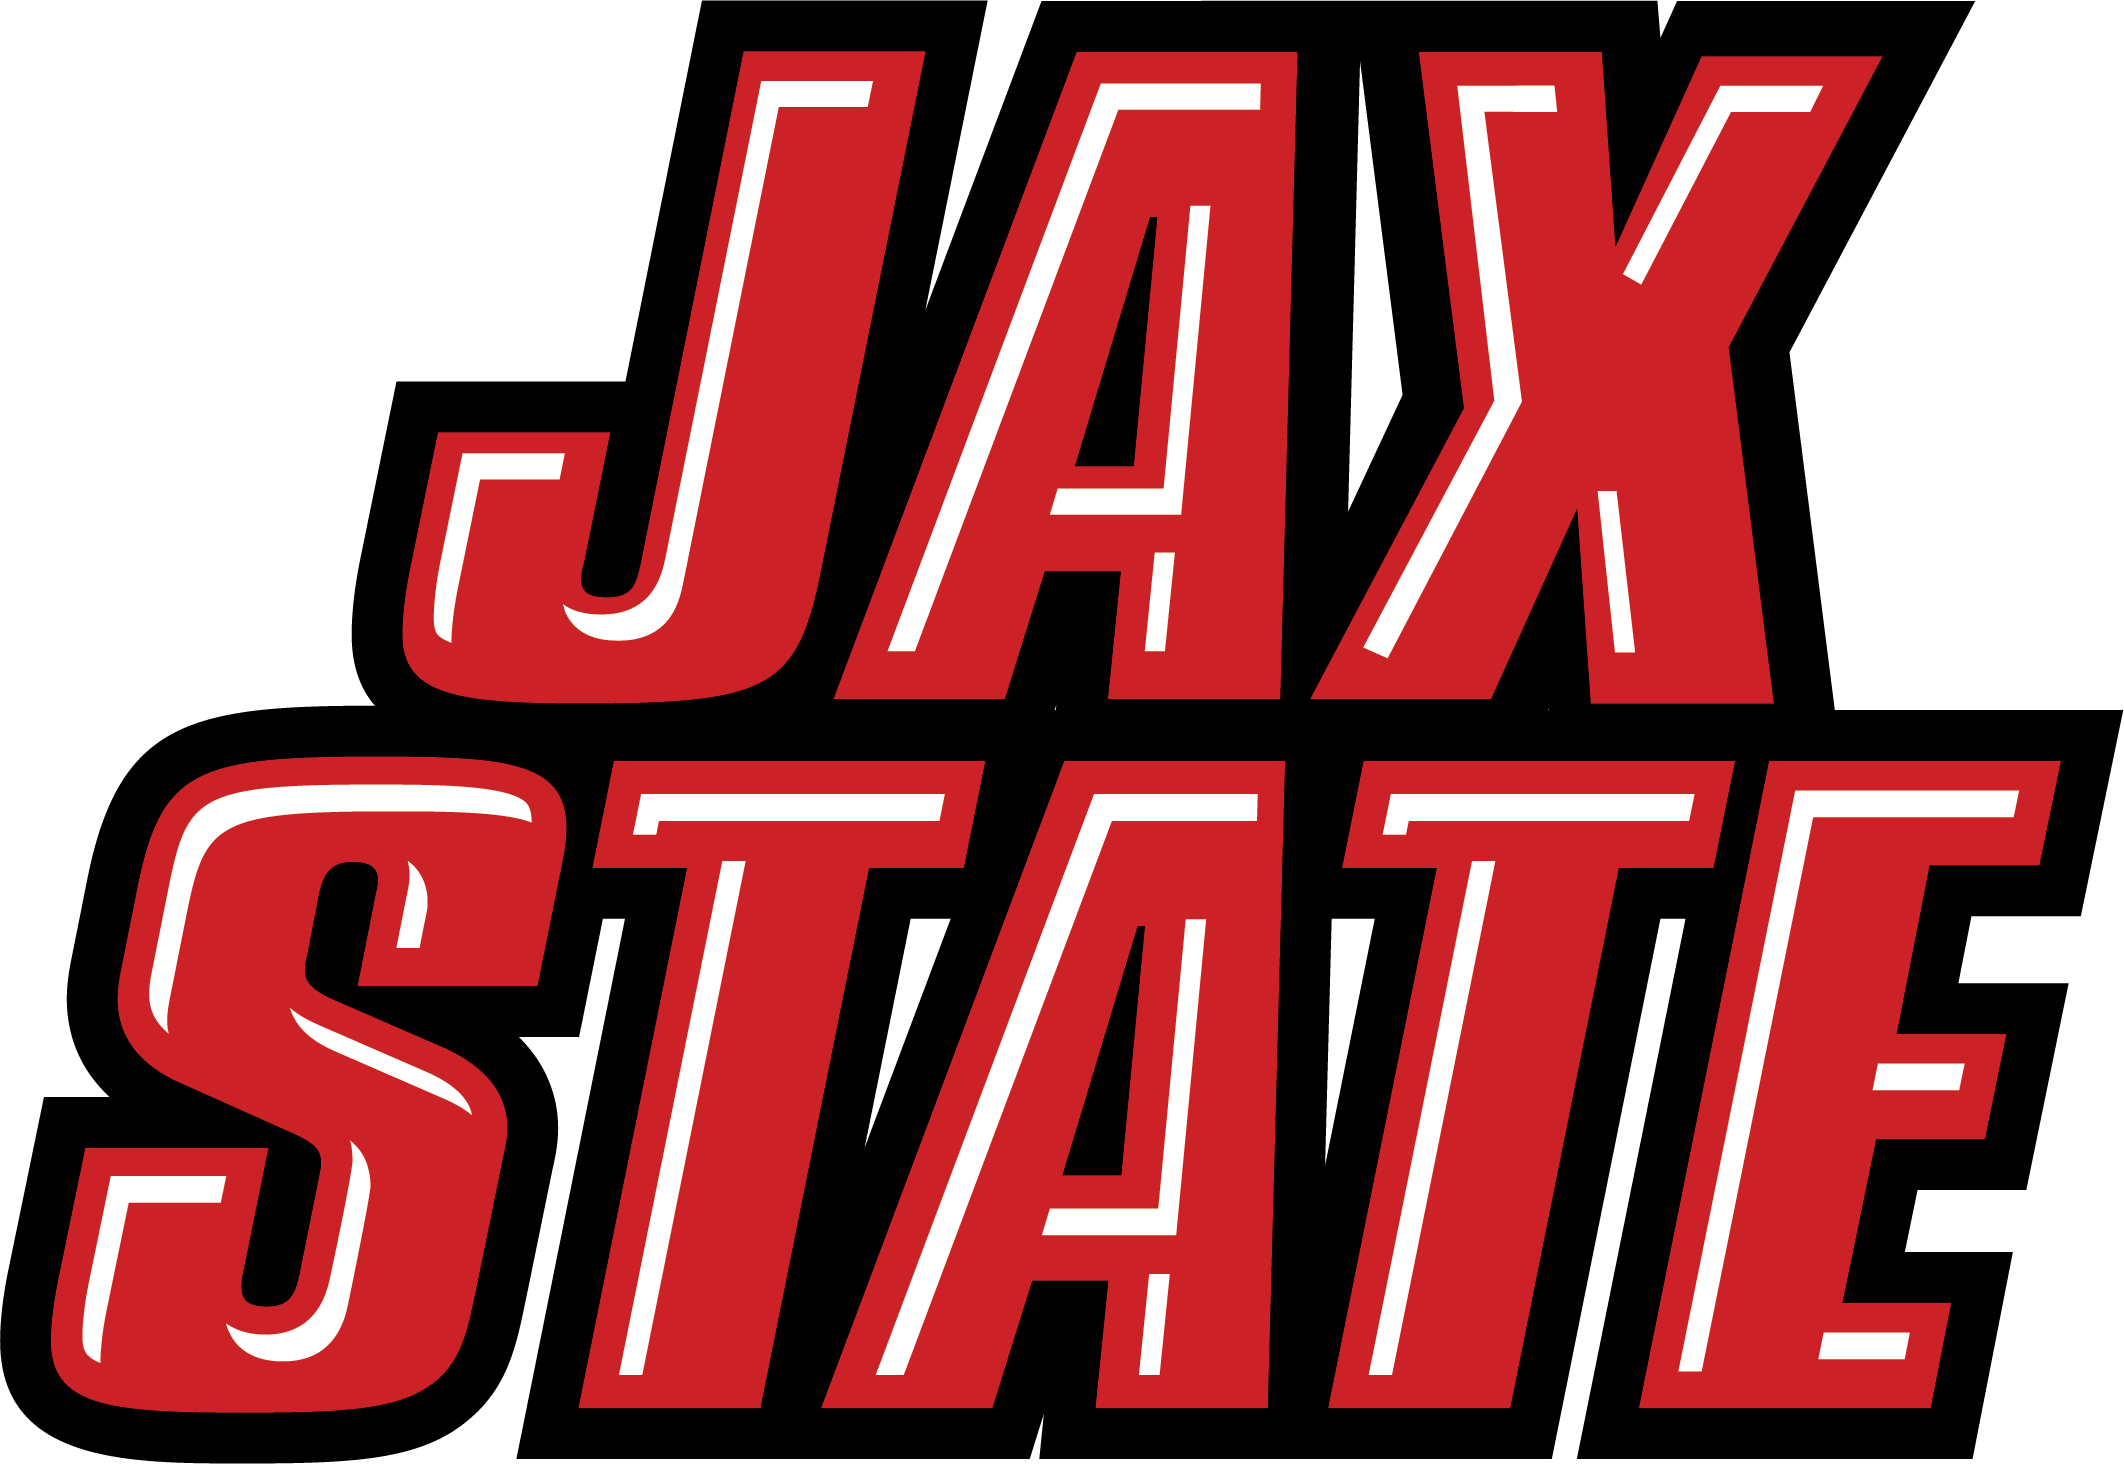 Jacksonville State